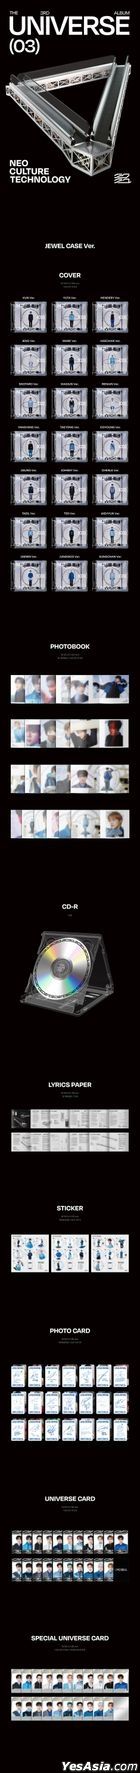 NCT Vol. 3 - Universe (Jewel Case Version) (Shotaro Version) + Poster in Tube